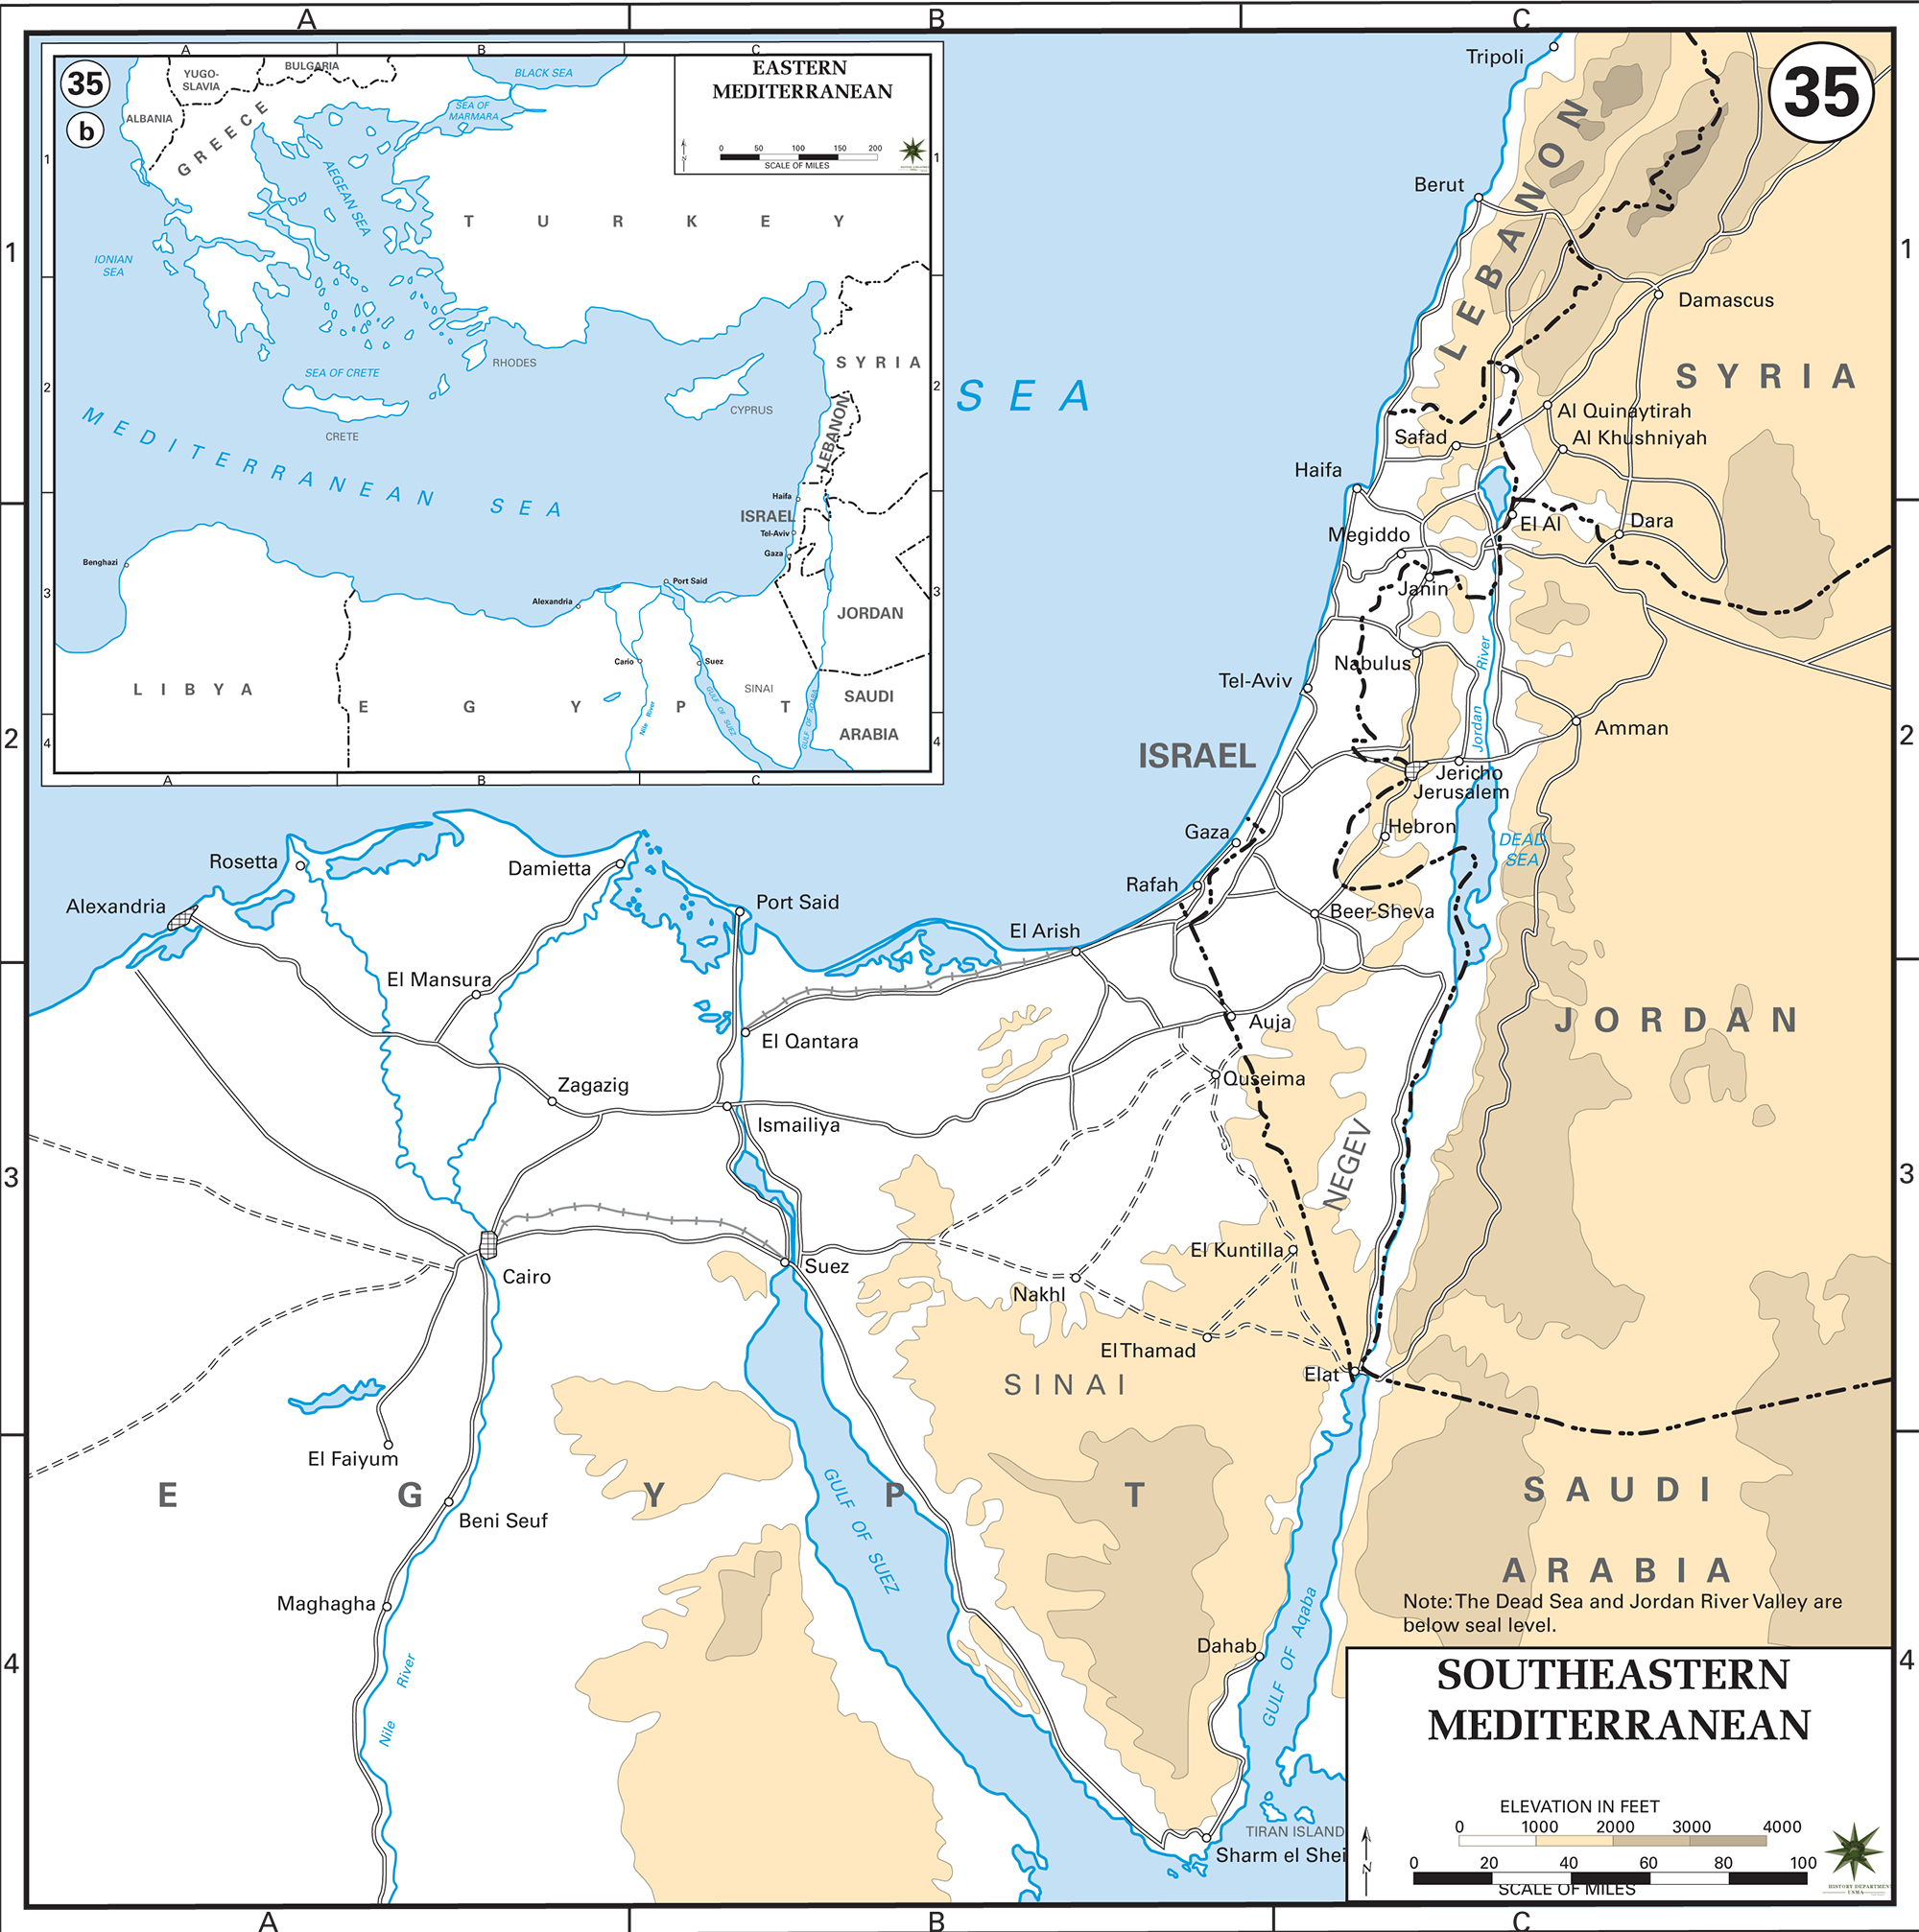 Map of the Southeastern Mediterranean: Lebanon, Syria, Jordan, Israel, Egypt, Saudi Arabia, Sinai Peninsula